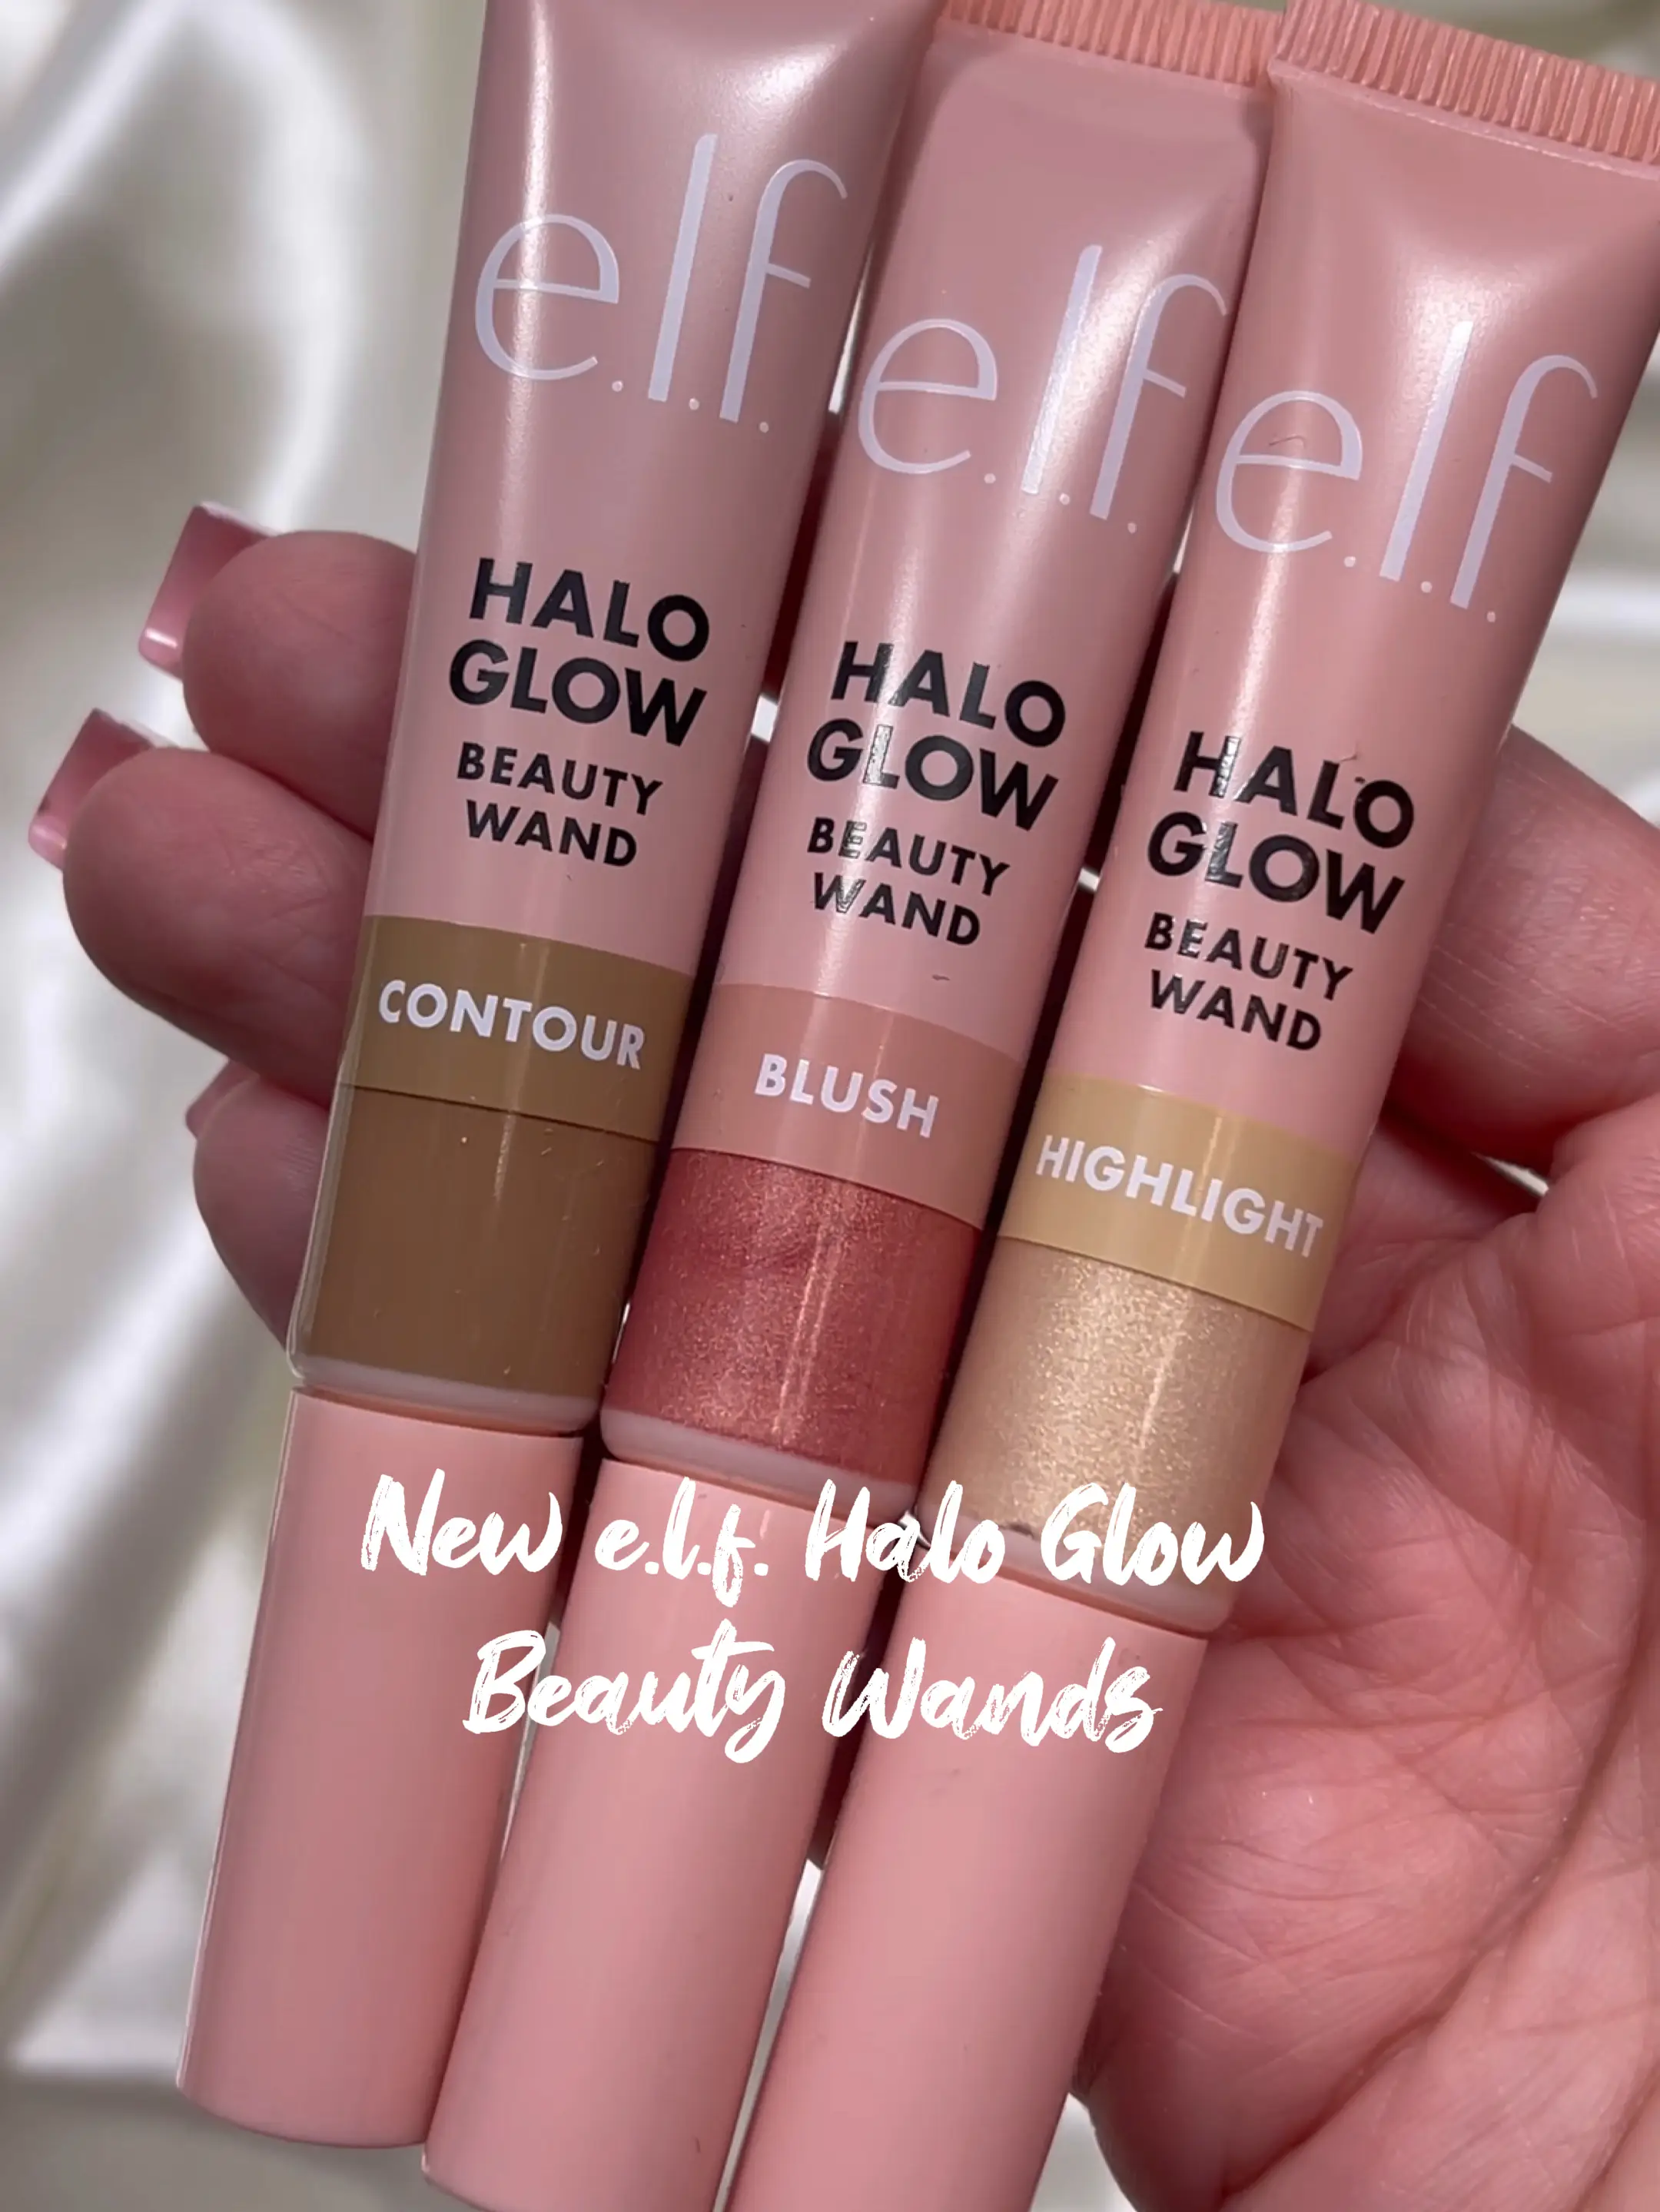 Elf Cosmetics Halo Glow Contour Beauty Wand E.L.F. New in the Box